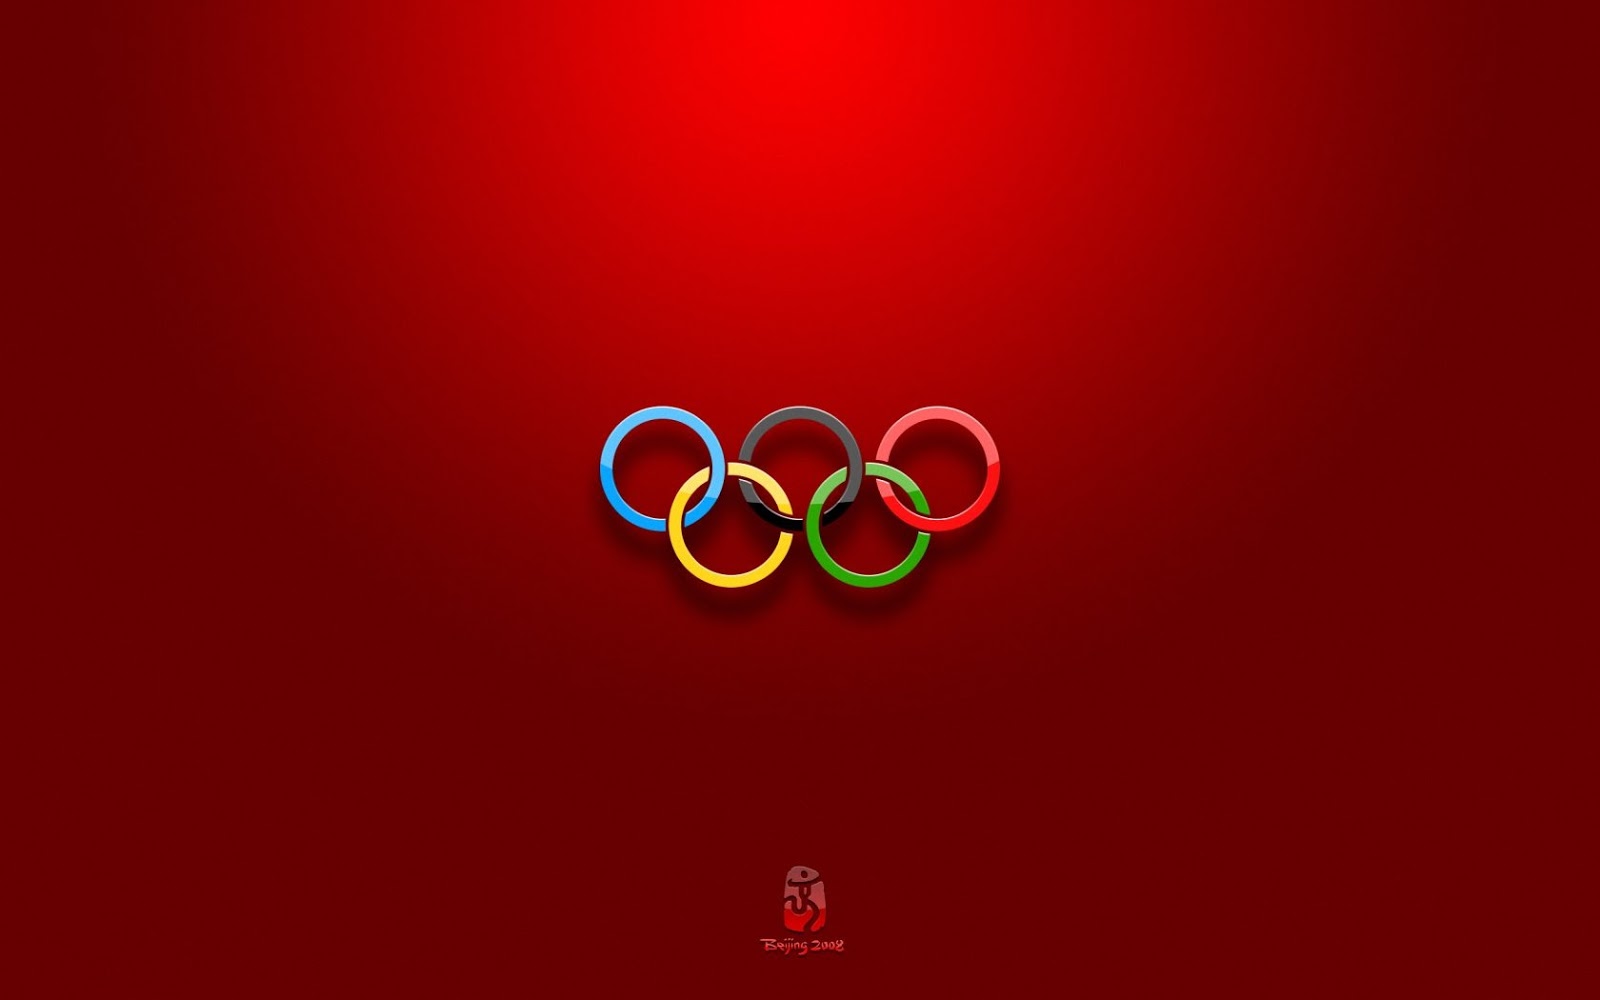 HD Wallpaper Of Olympic Arrowsplit Summer Olympics